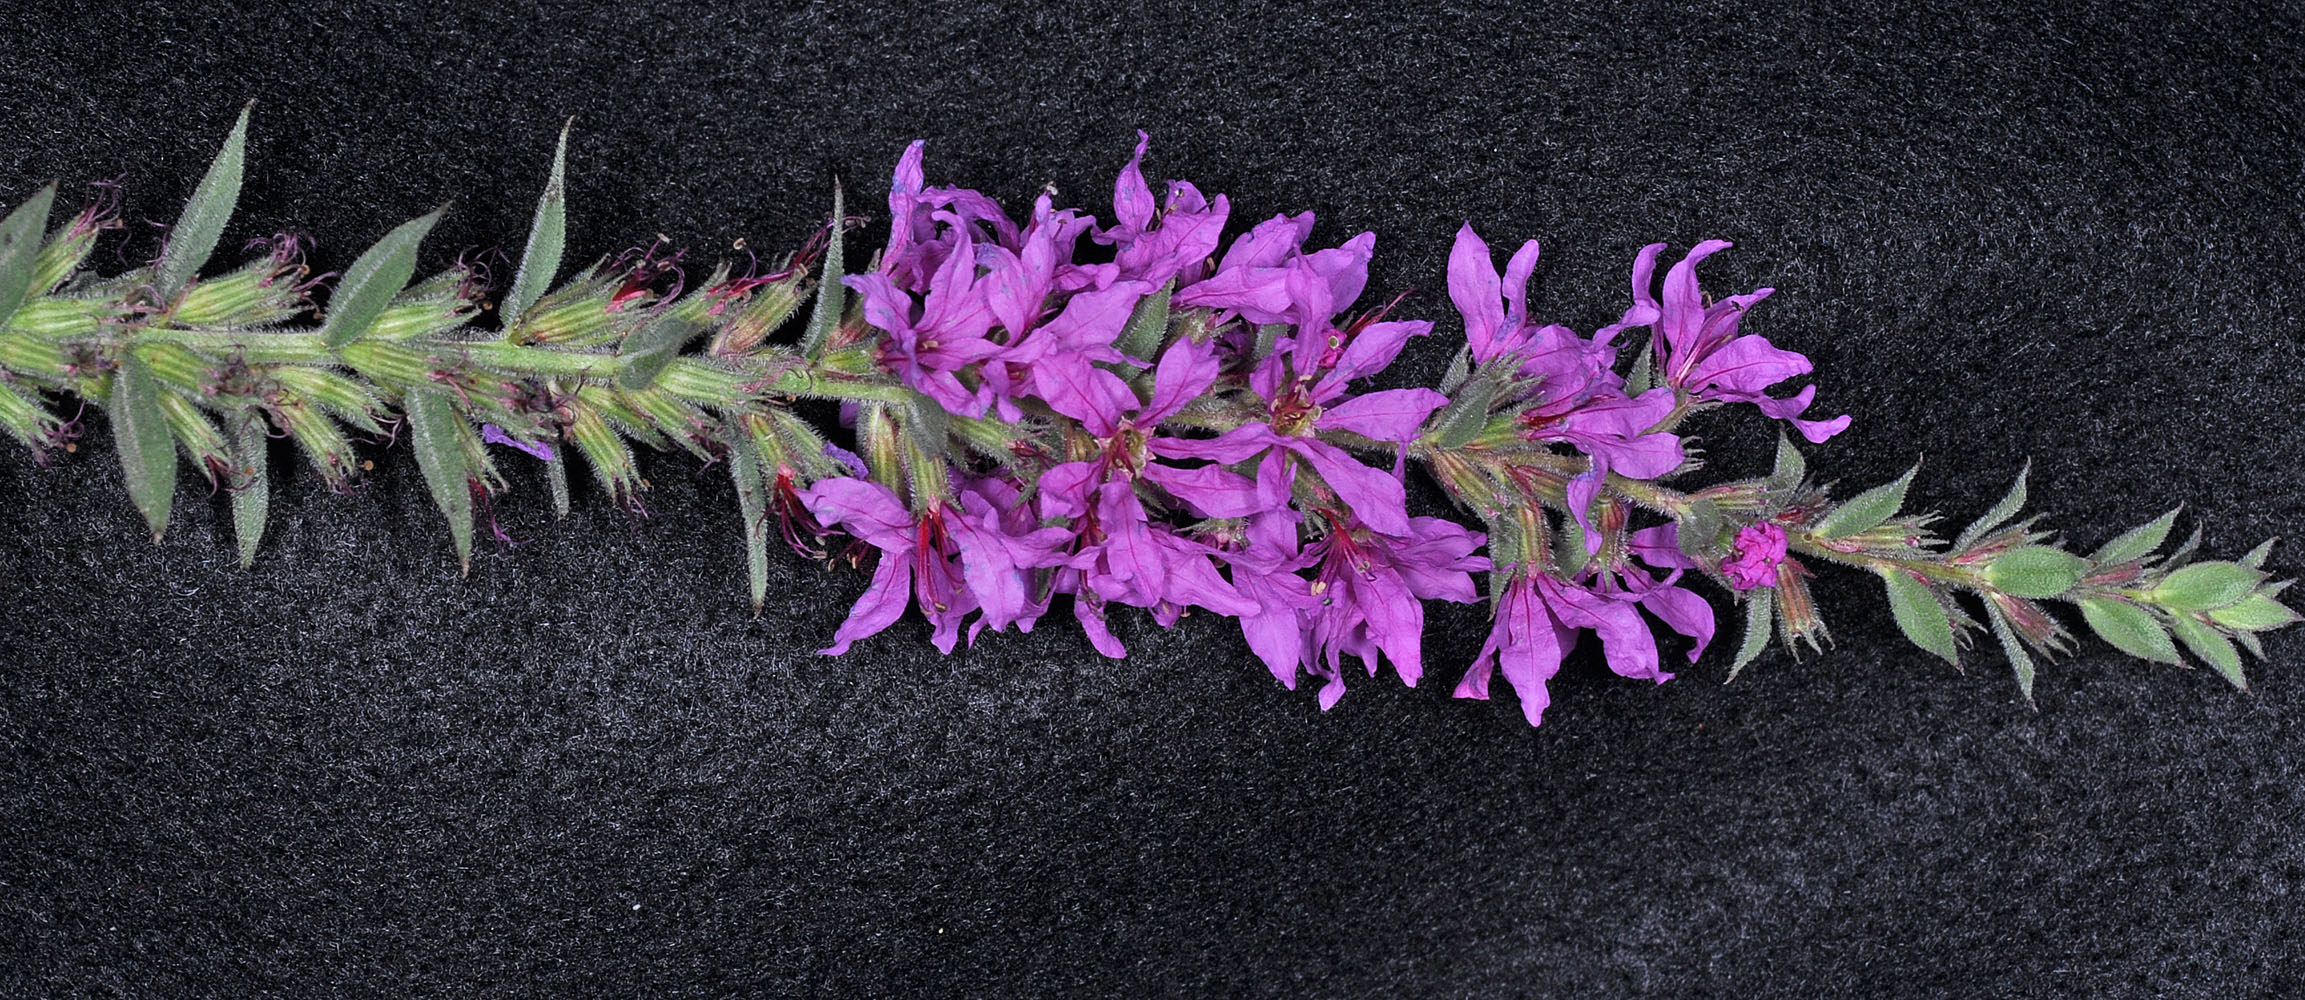 Flora of Eastern Washington Image: Lythrum salicaria